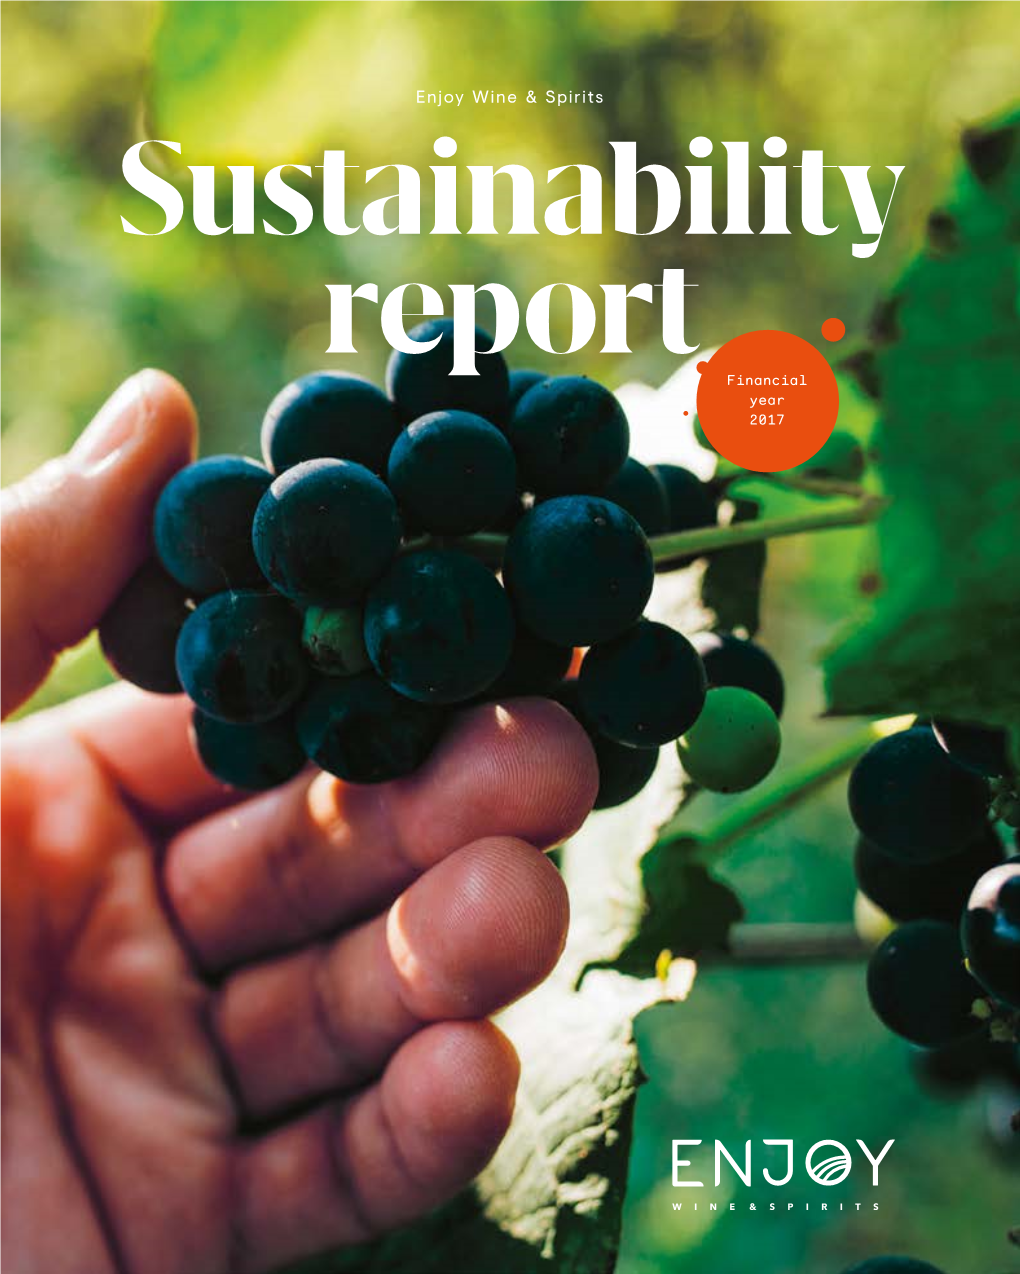 Sustainability Reportfinancial